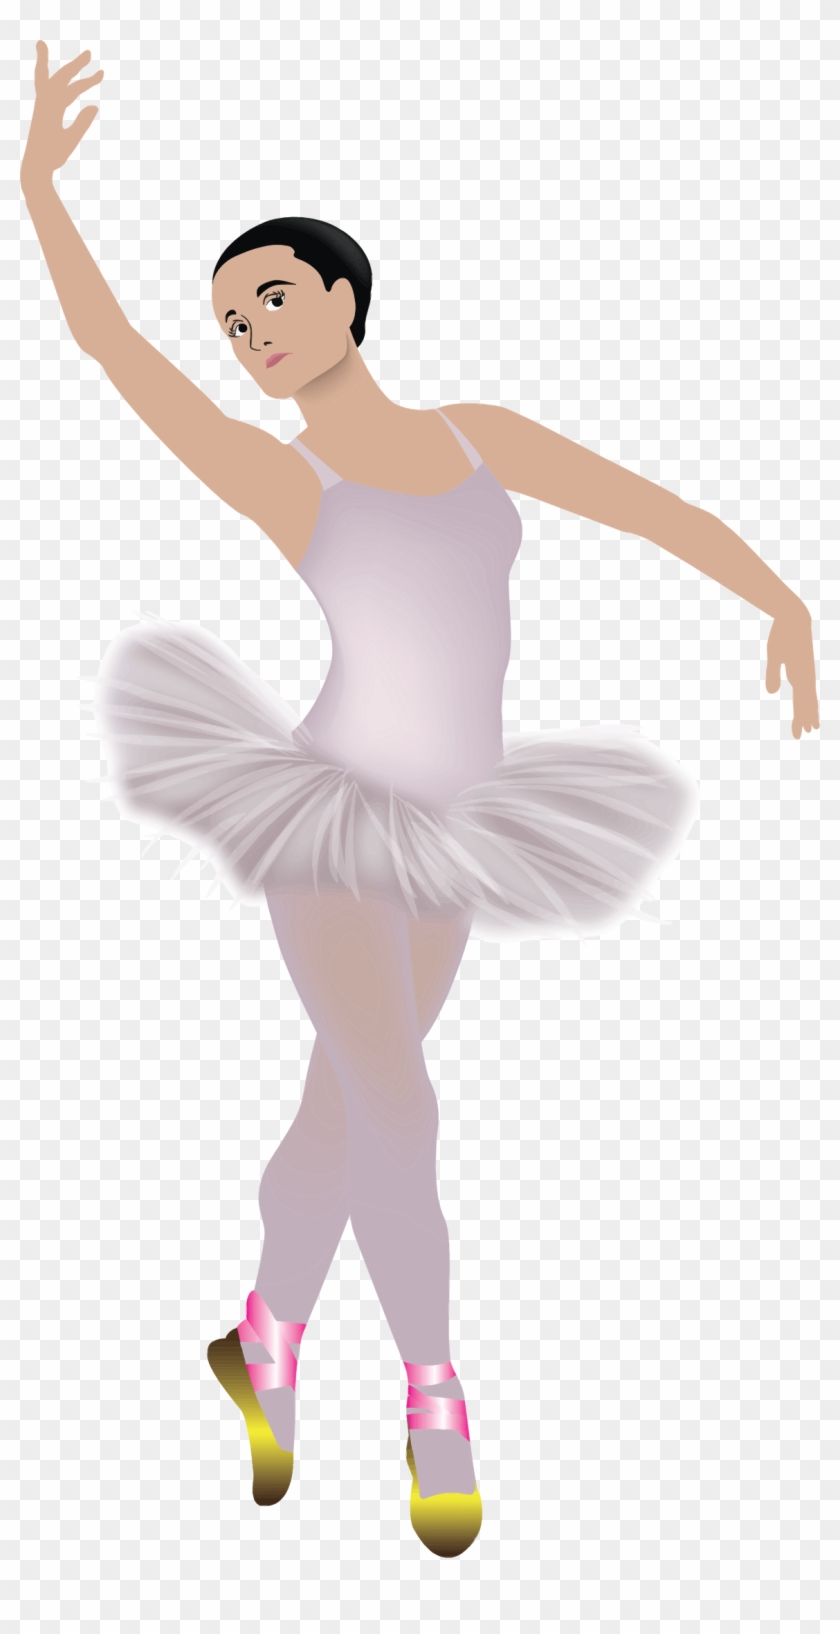 Big Image - Ballerina Silhouette #199339